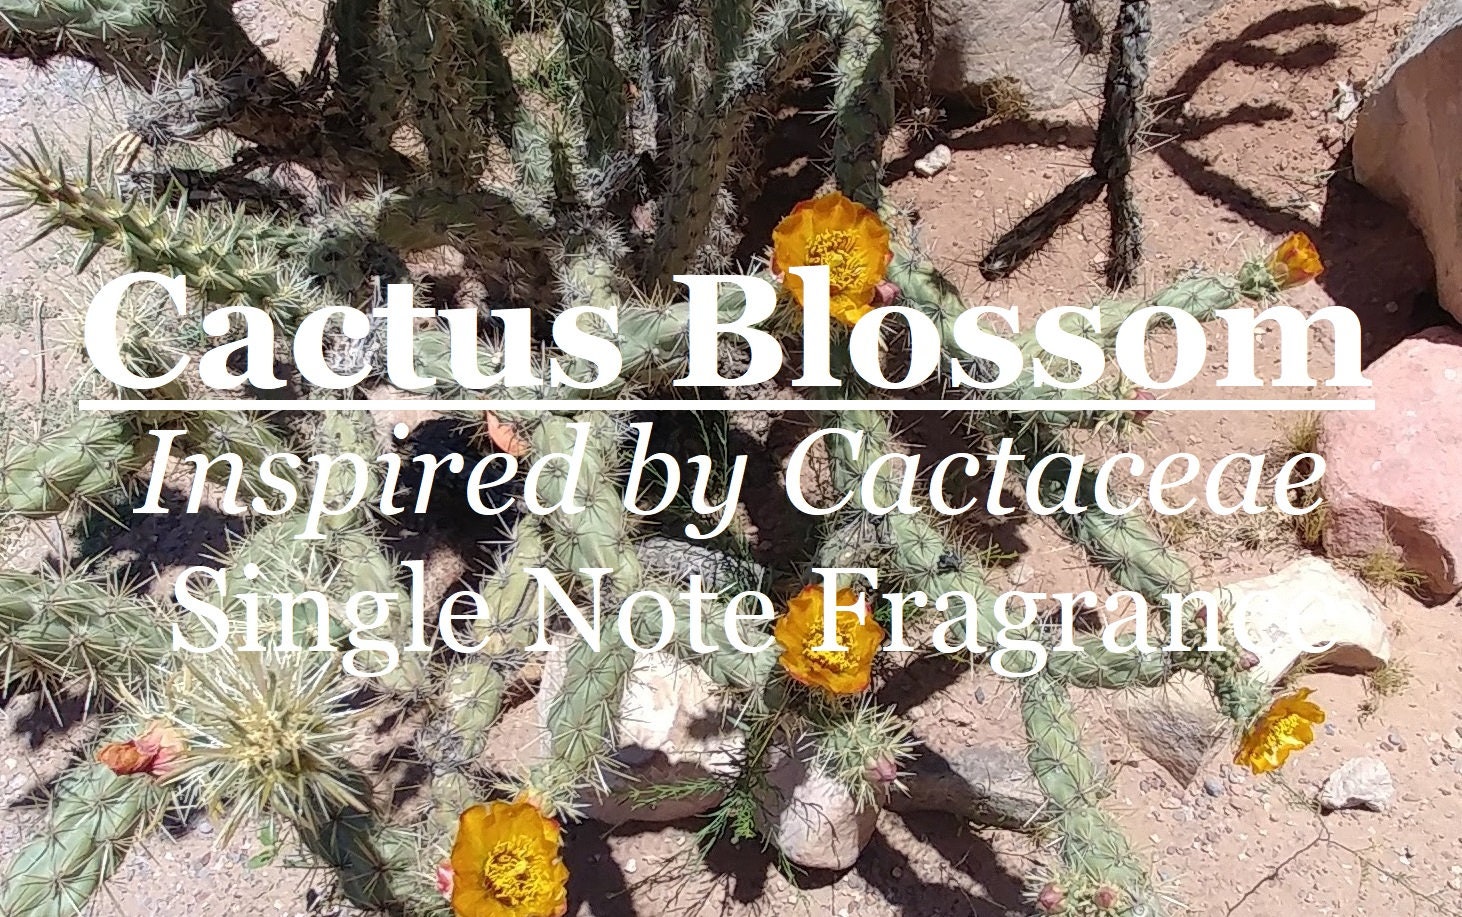 Cactus Blossom Inspired Perfume 